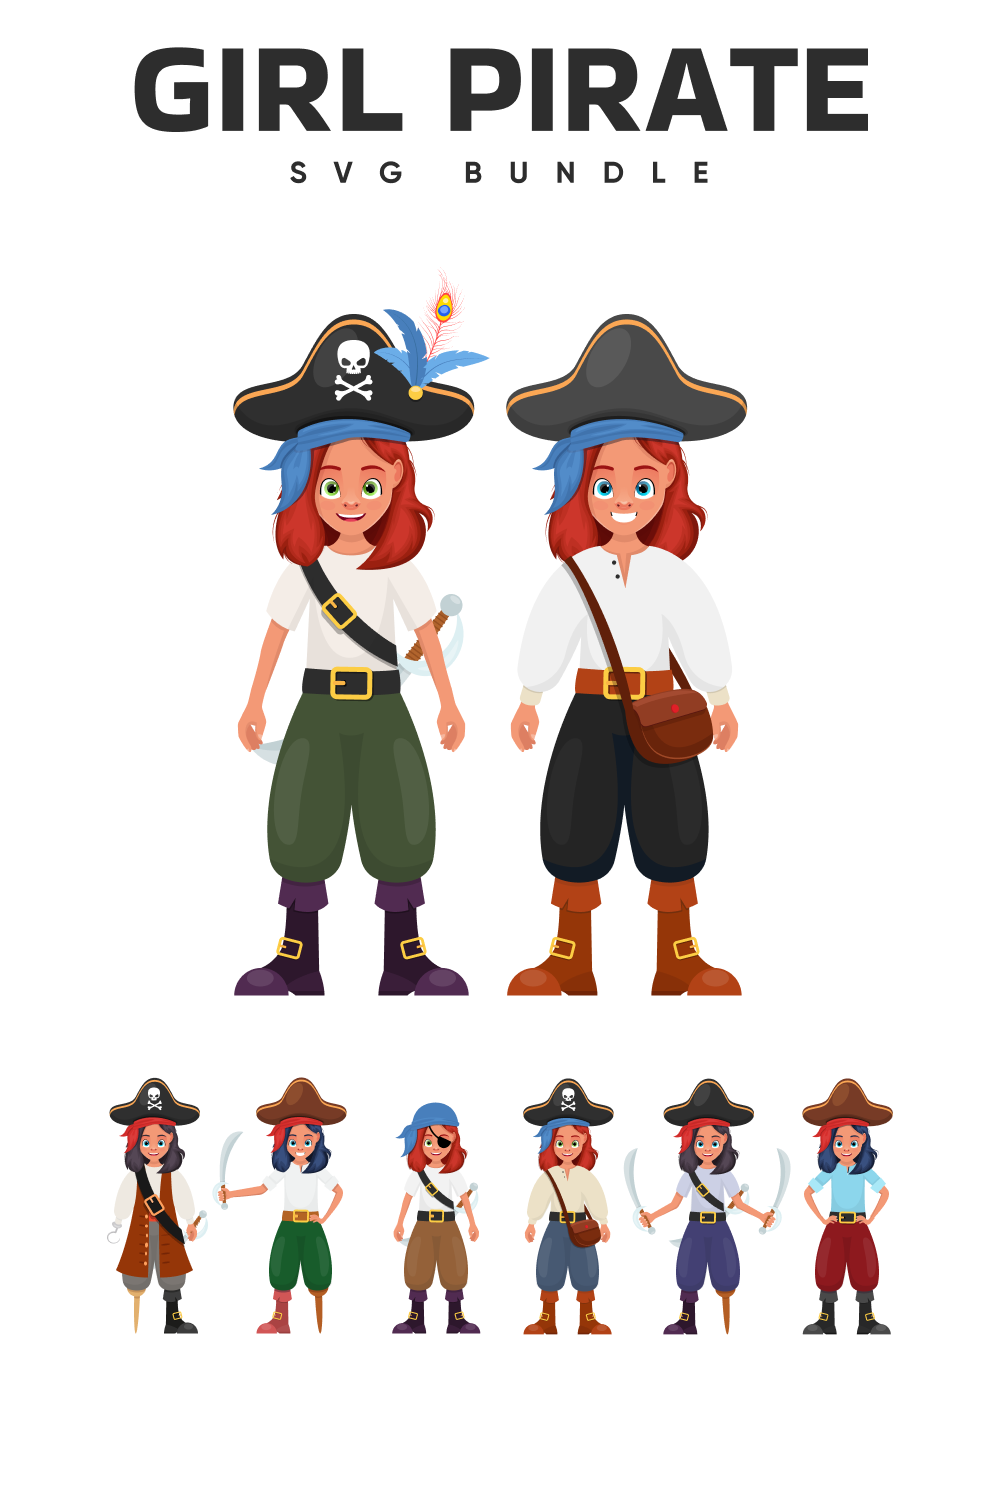 Girl pirate svg bundle of pinterest.